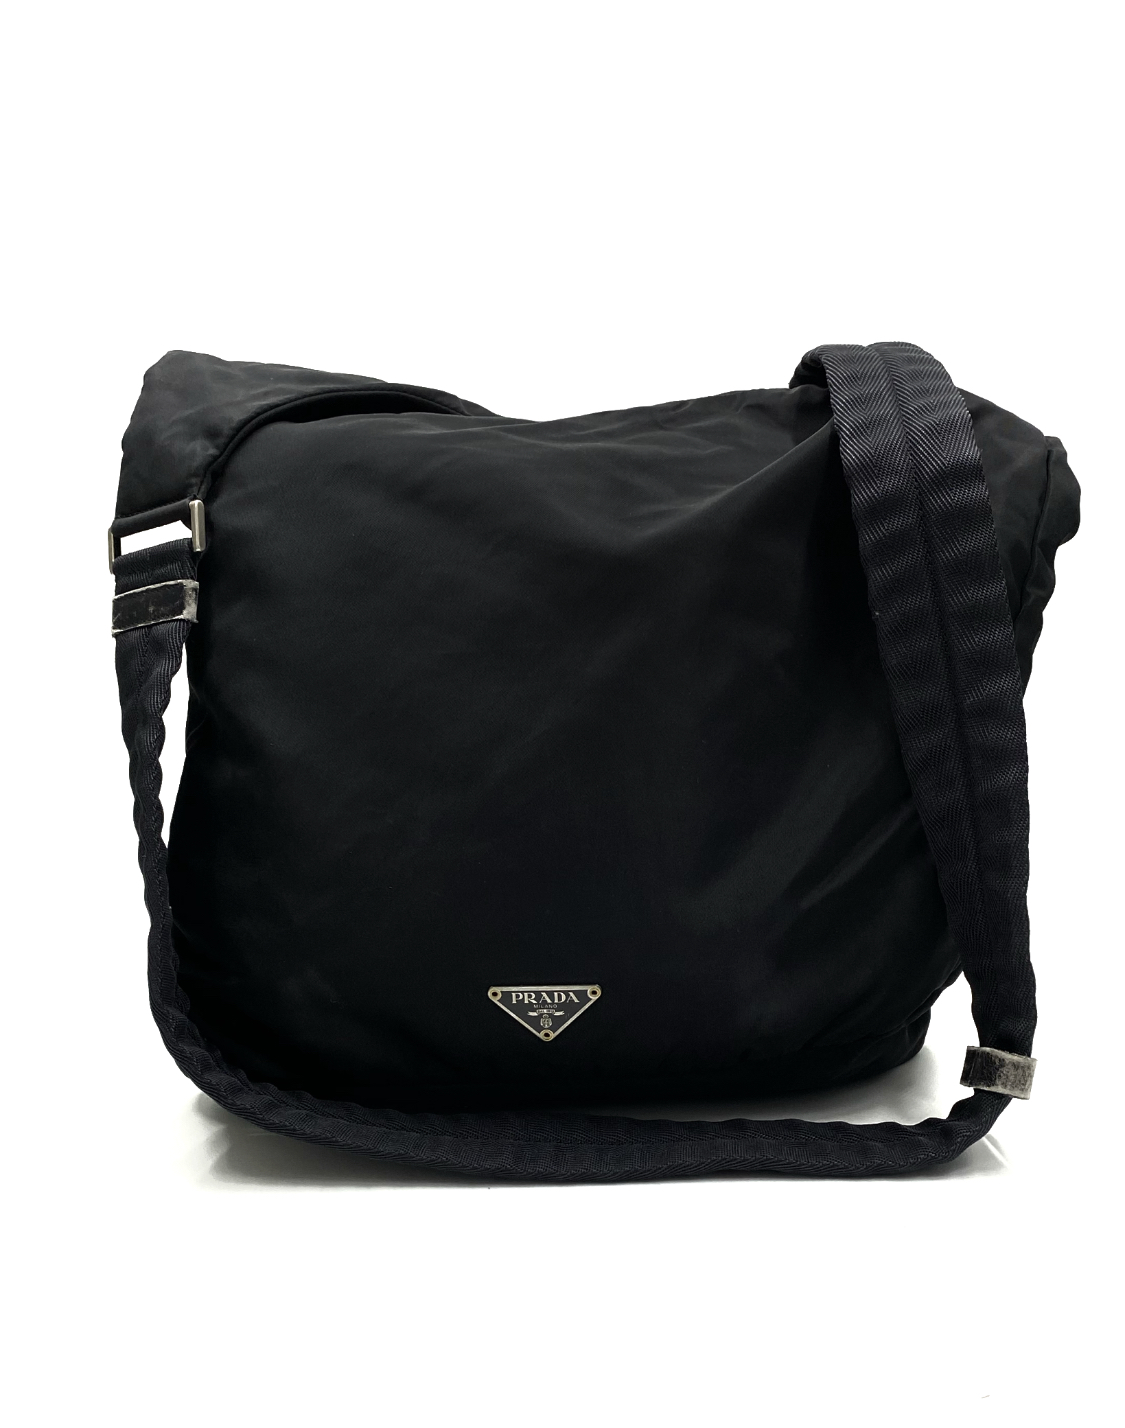 Prada Large Black Side Bag